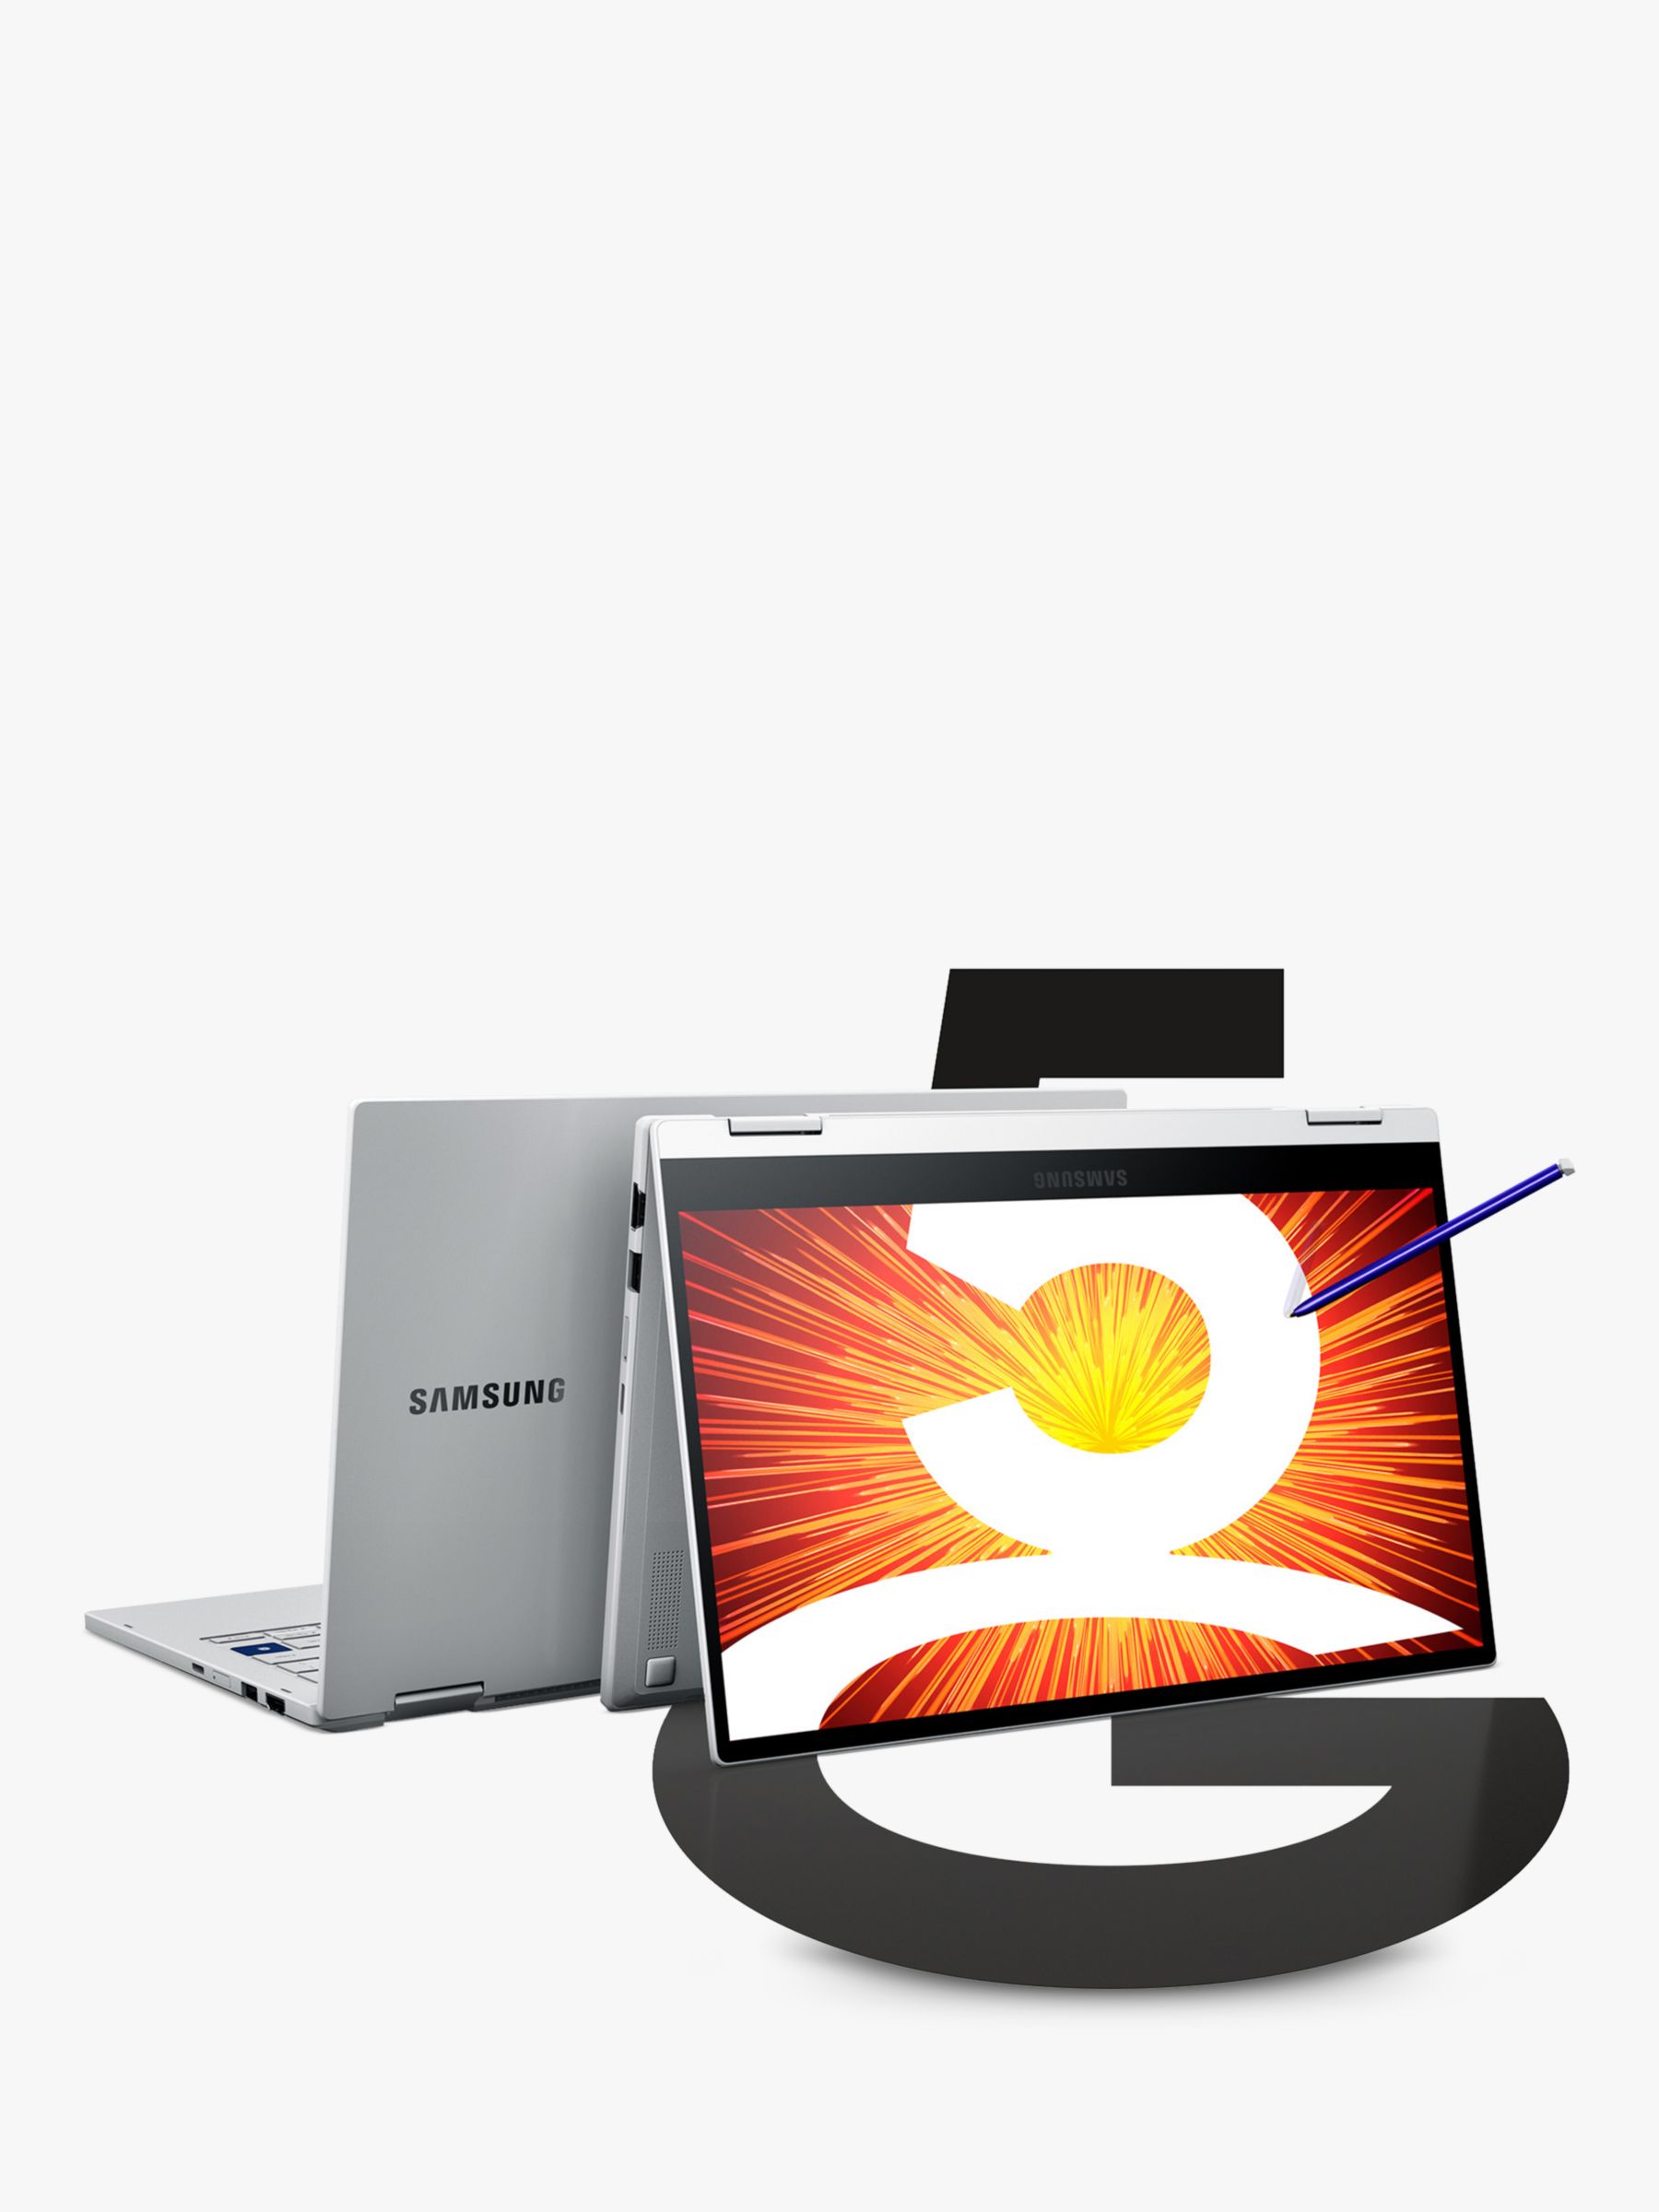 Samsung Galaxy Book Flex 2 5G Convertible Laptop, Intel Core i5 Processor, 8GB RAM, 256GB SSD, 13 Full HD, Royal Silver